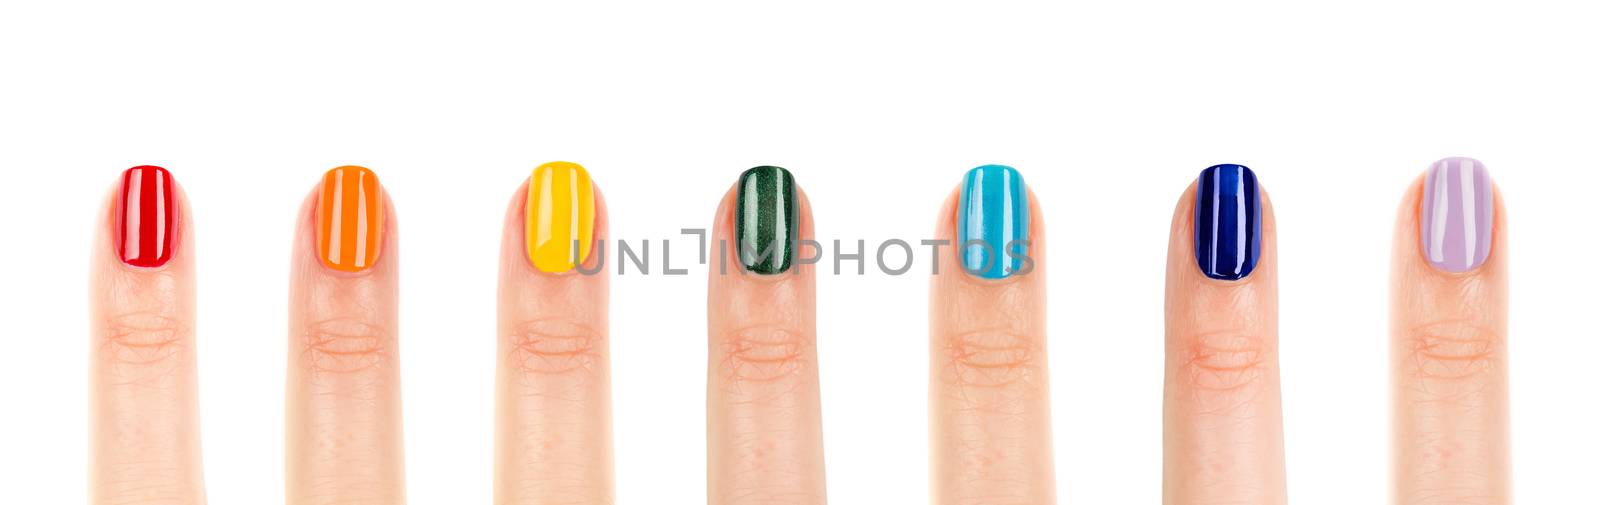 rainbow Nails by RuslanOmega